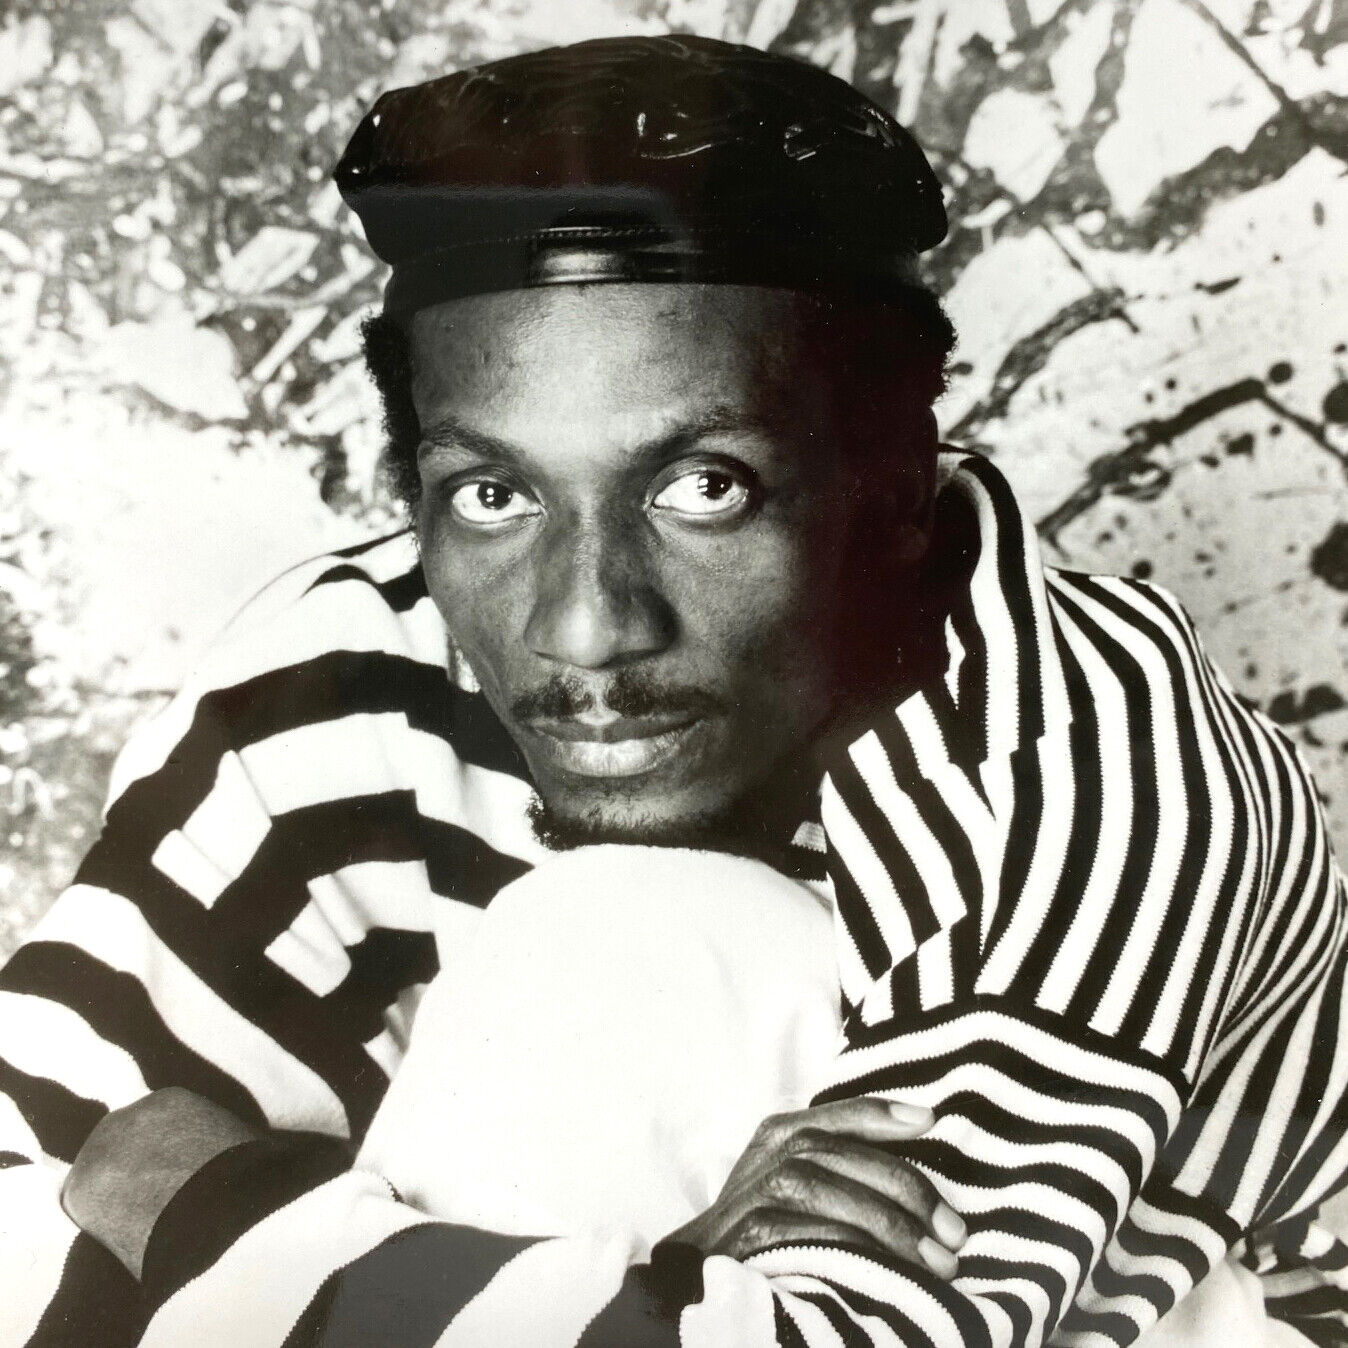 Vtg 1988 Jimmy Cliff Promo Photo James Chambers OM Jamaican Ska Rocksteady Soul